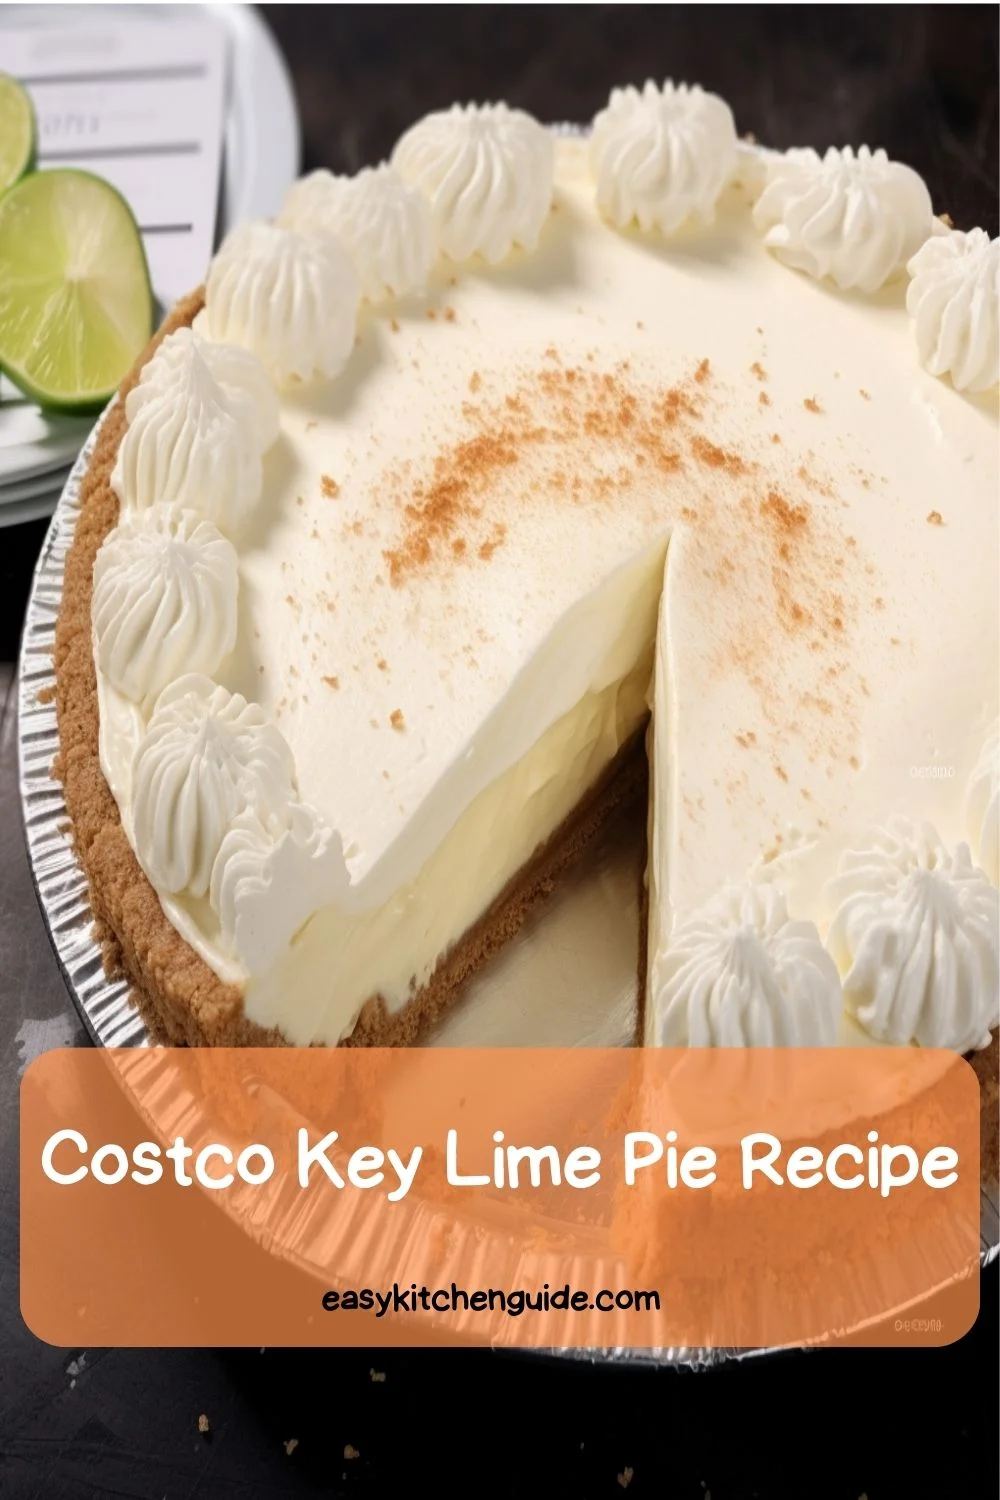 Costco Key Lime Pie Recipe